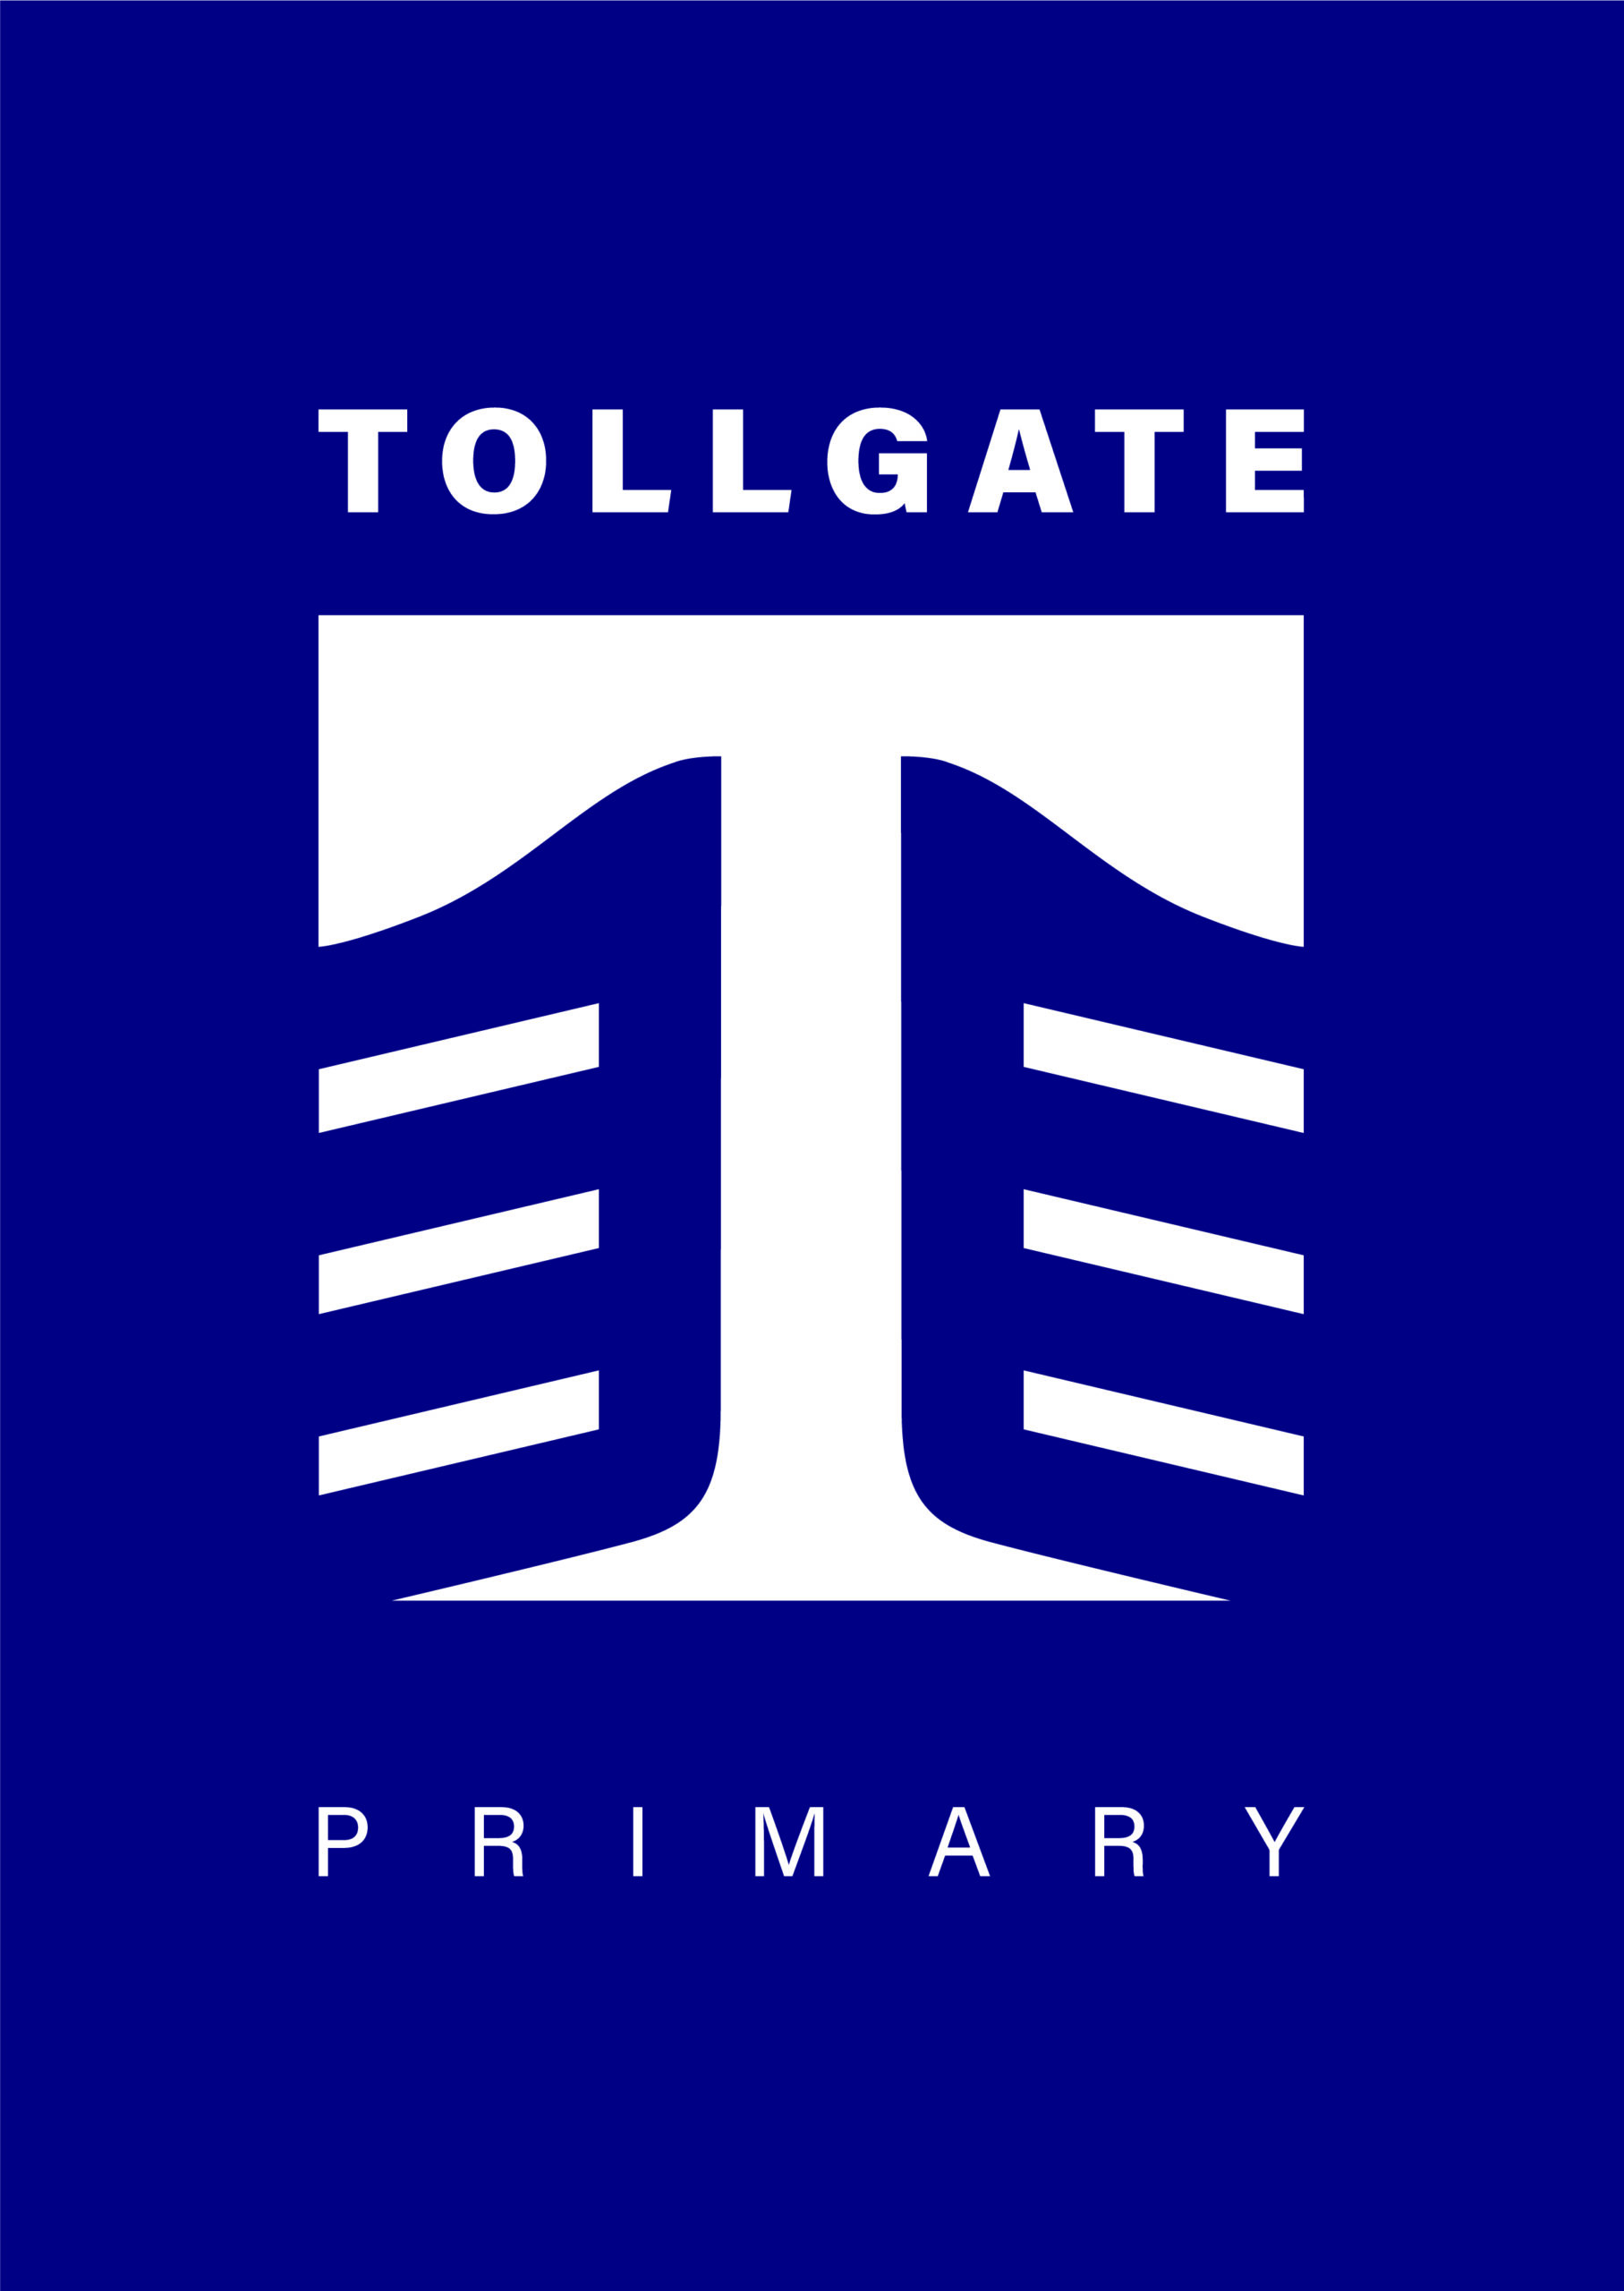 Tollgate Primary School